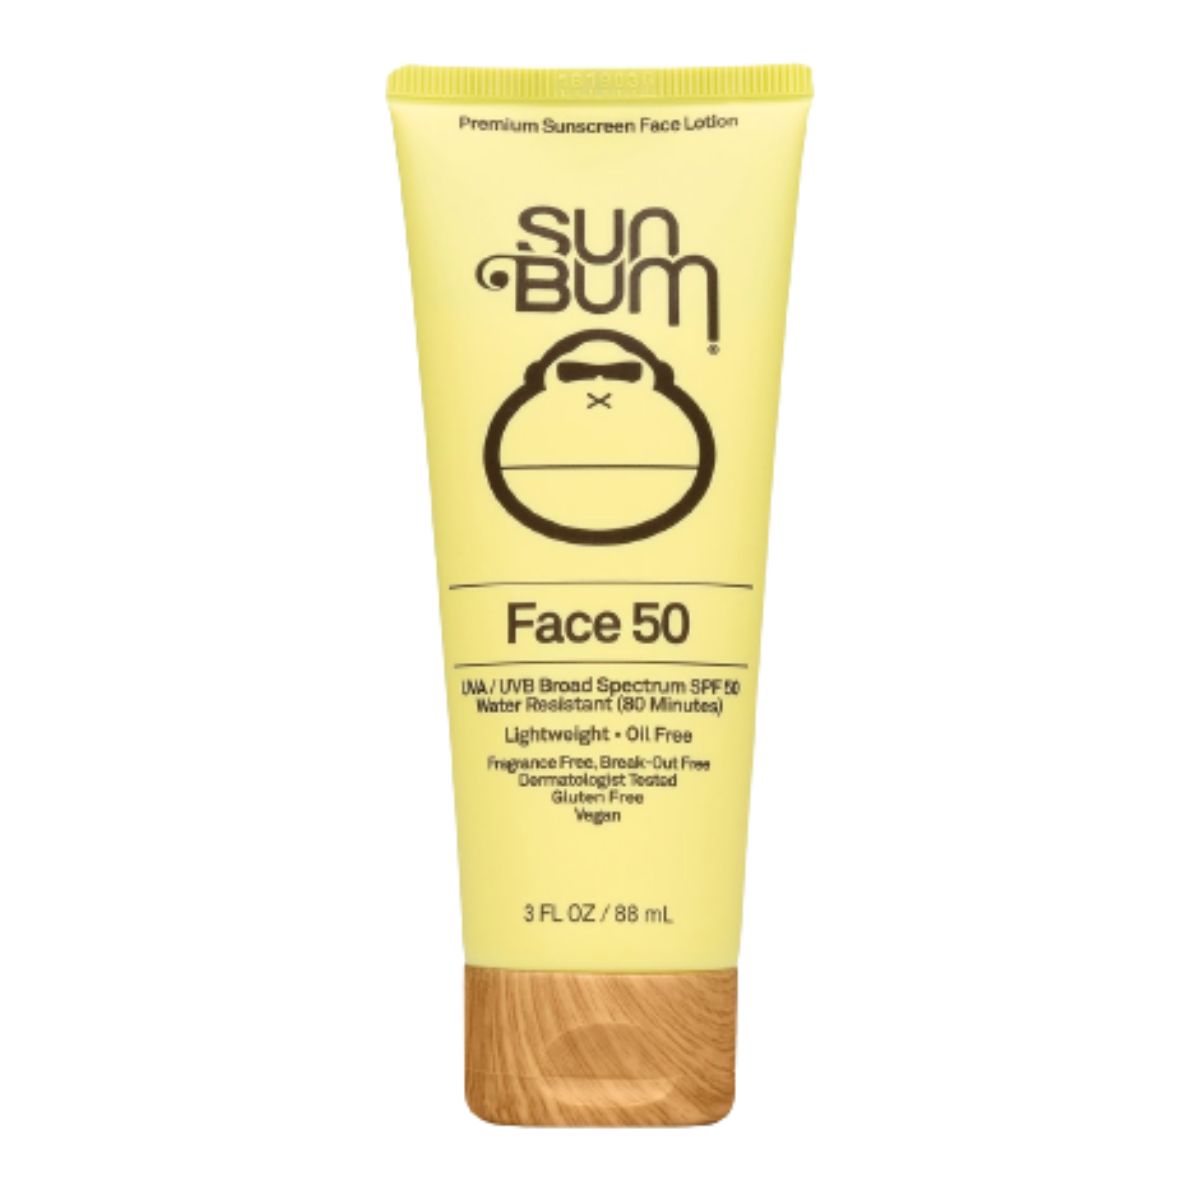 Sun Bum SPF50 Face Lotion